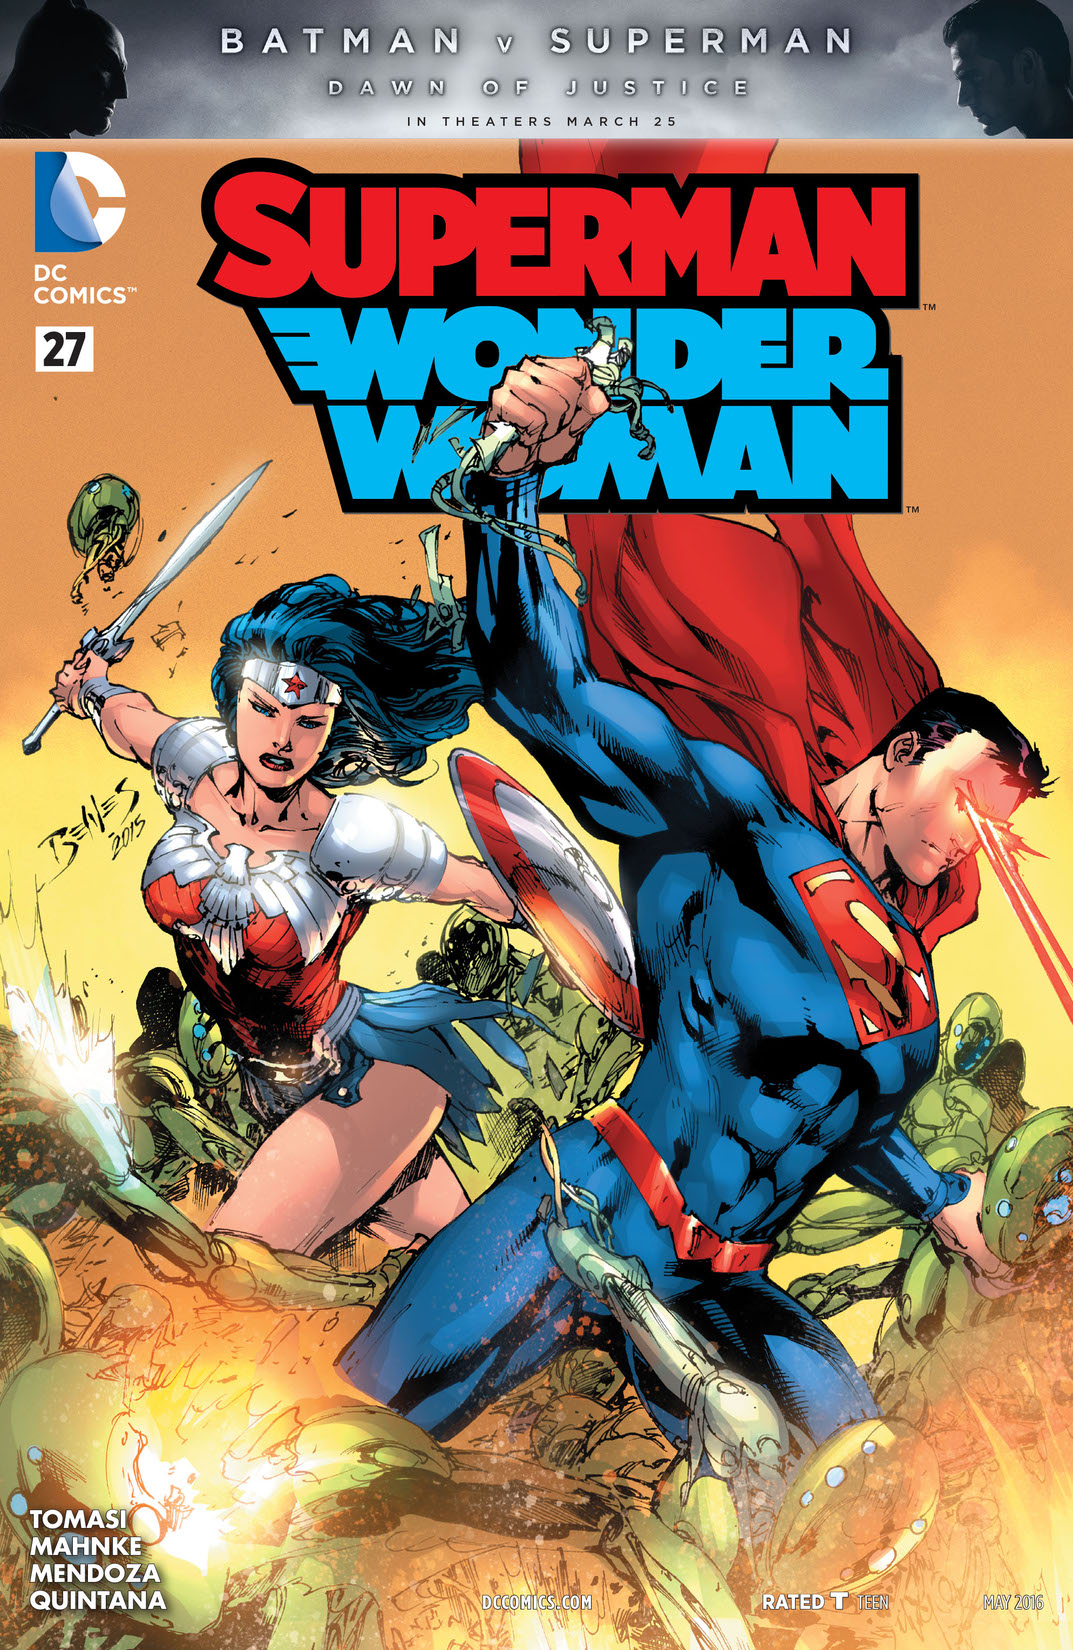 Superman/Wonder Woman #27 preview images